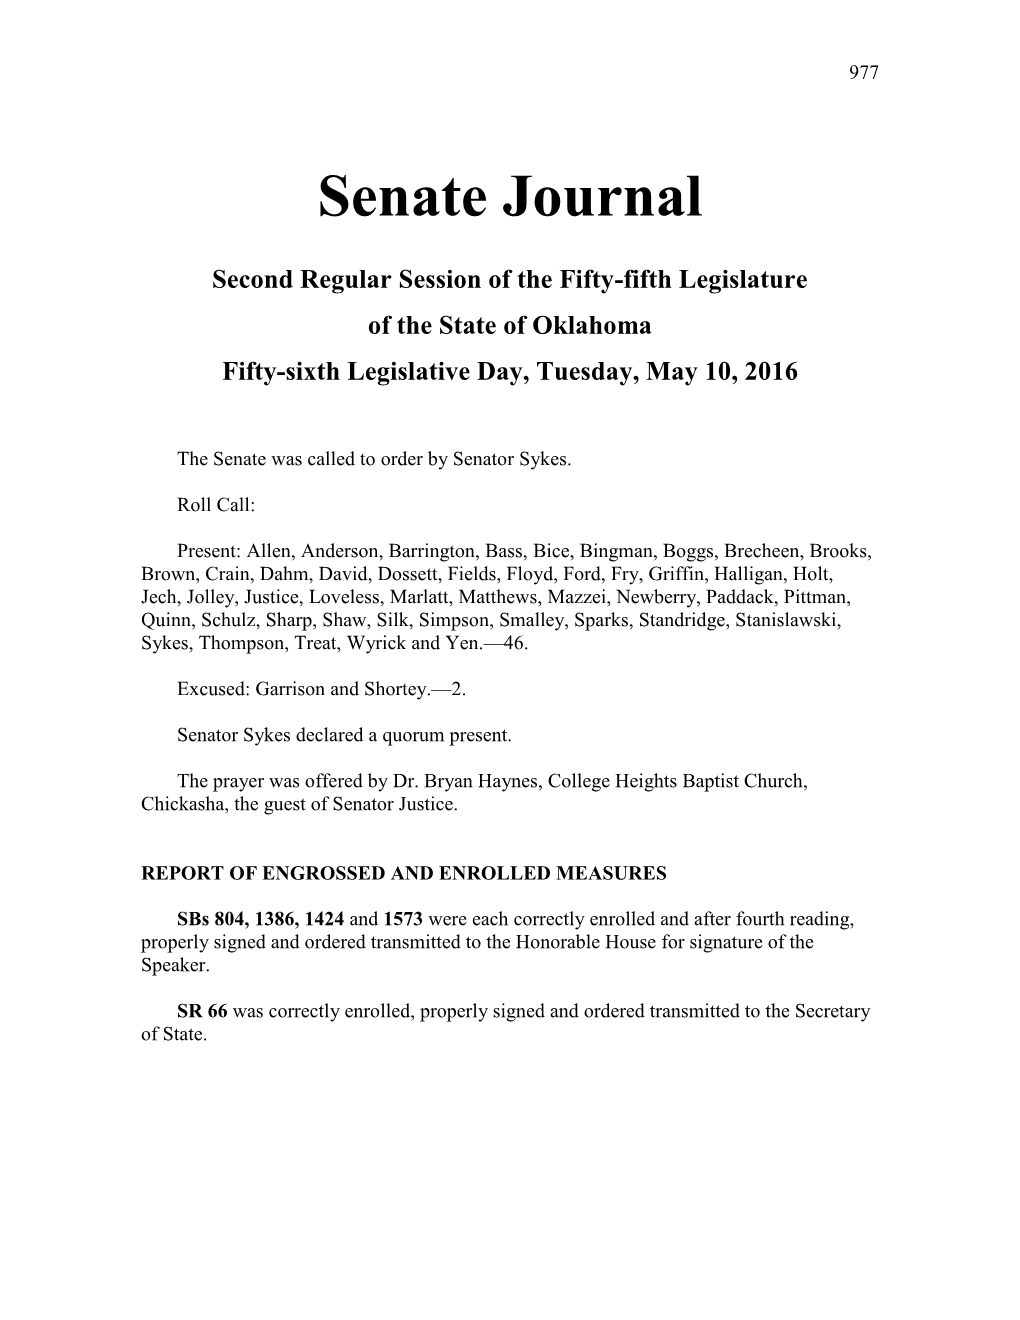 Senate Journal May 10, 2016